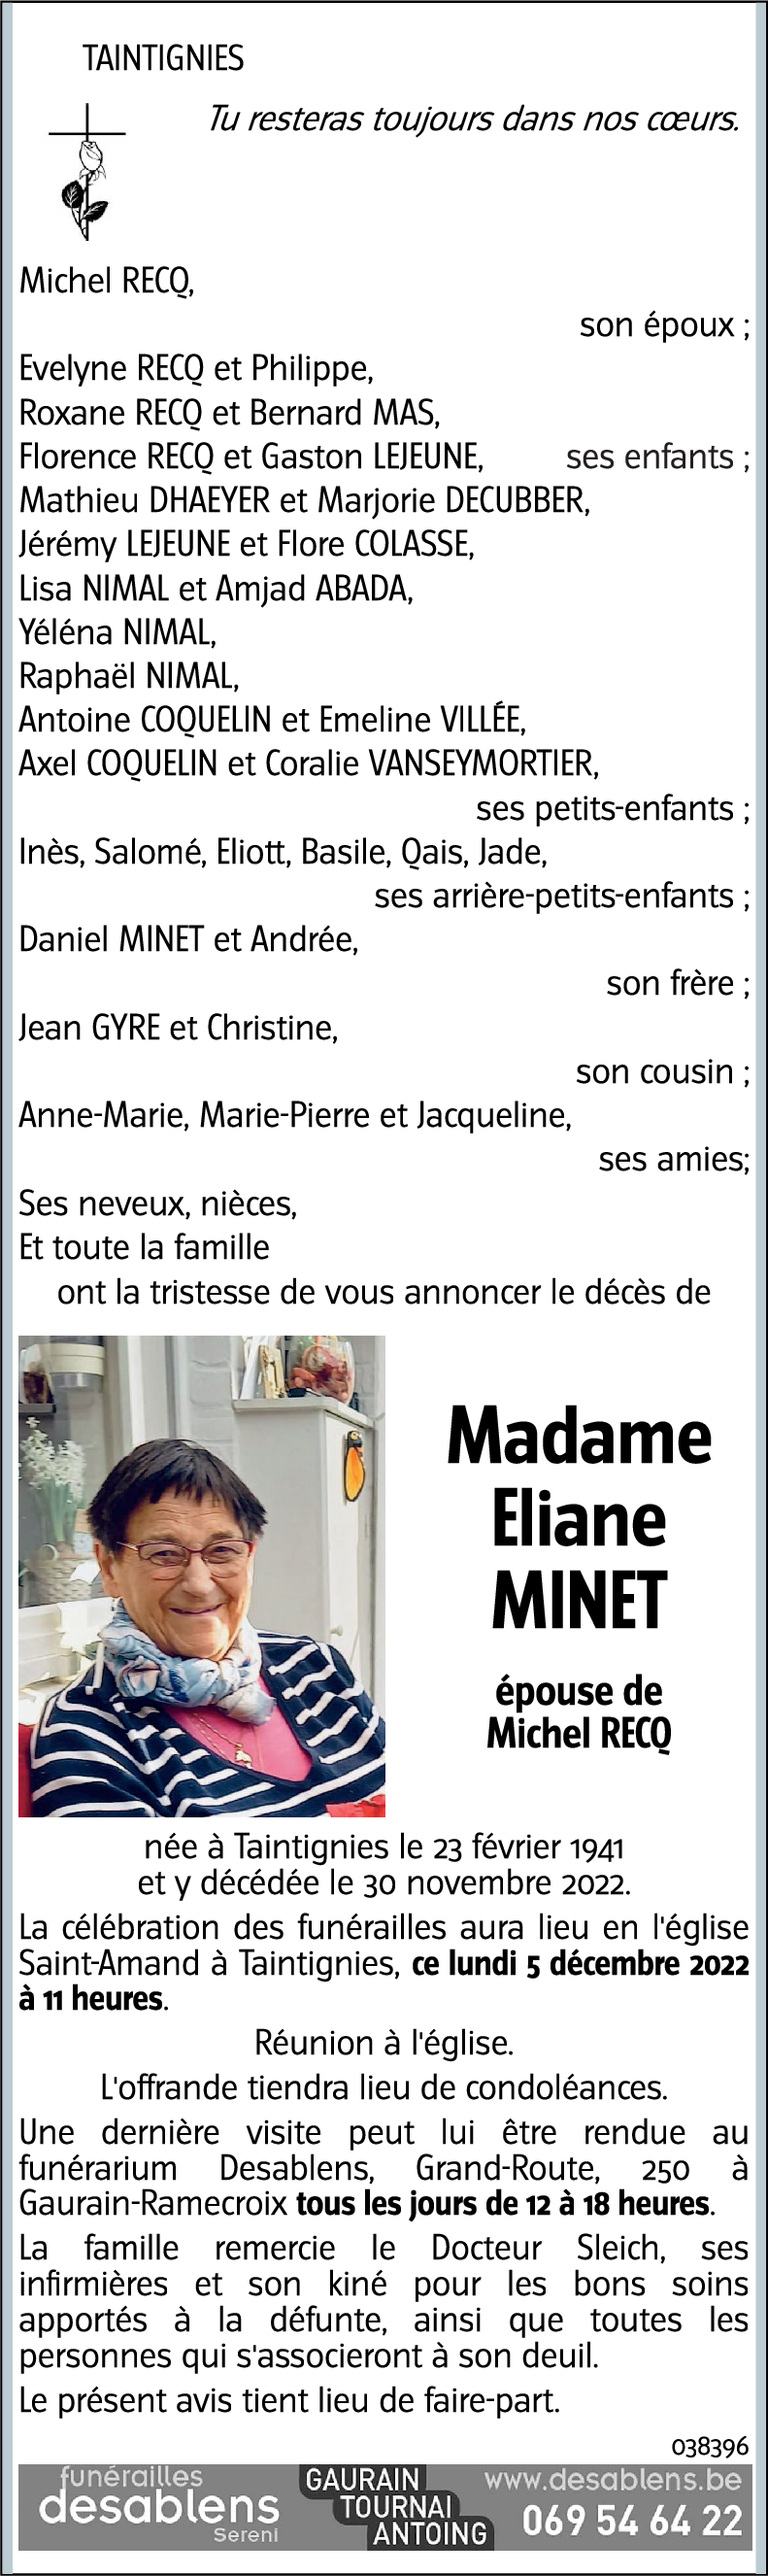 Eliane MINET